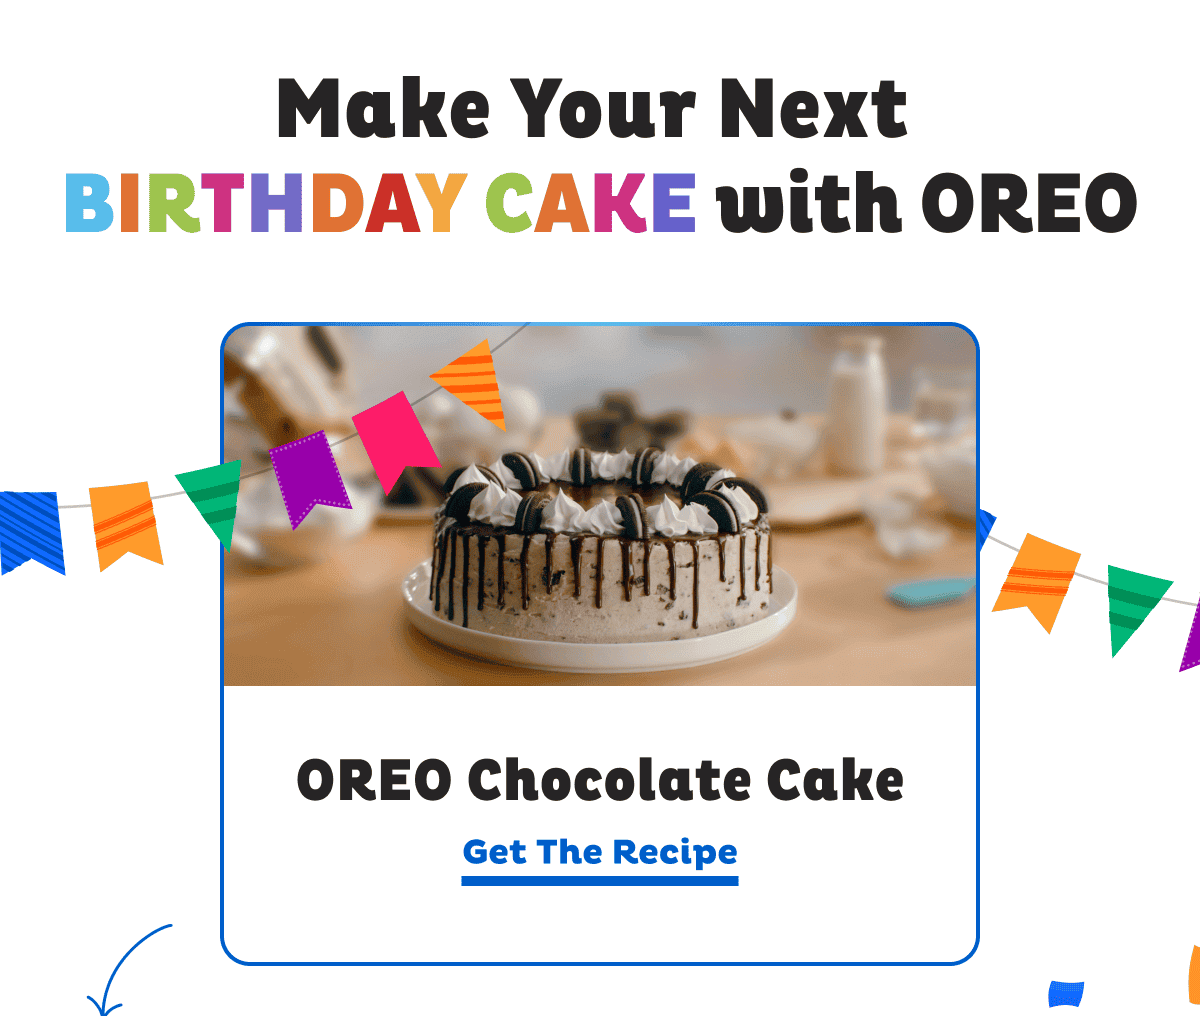 Try the OREO Chocolate Cake recipe